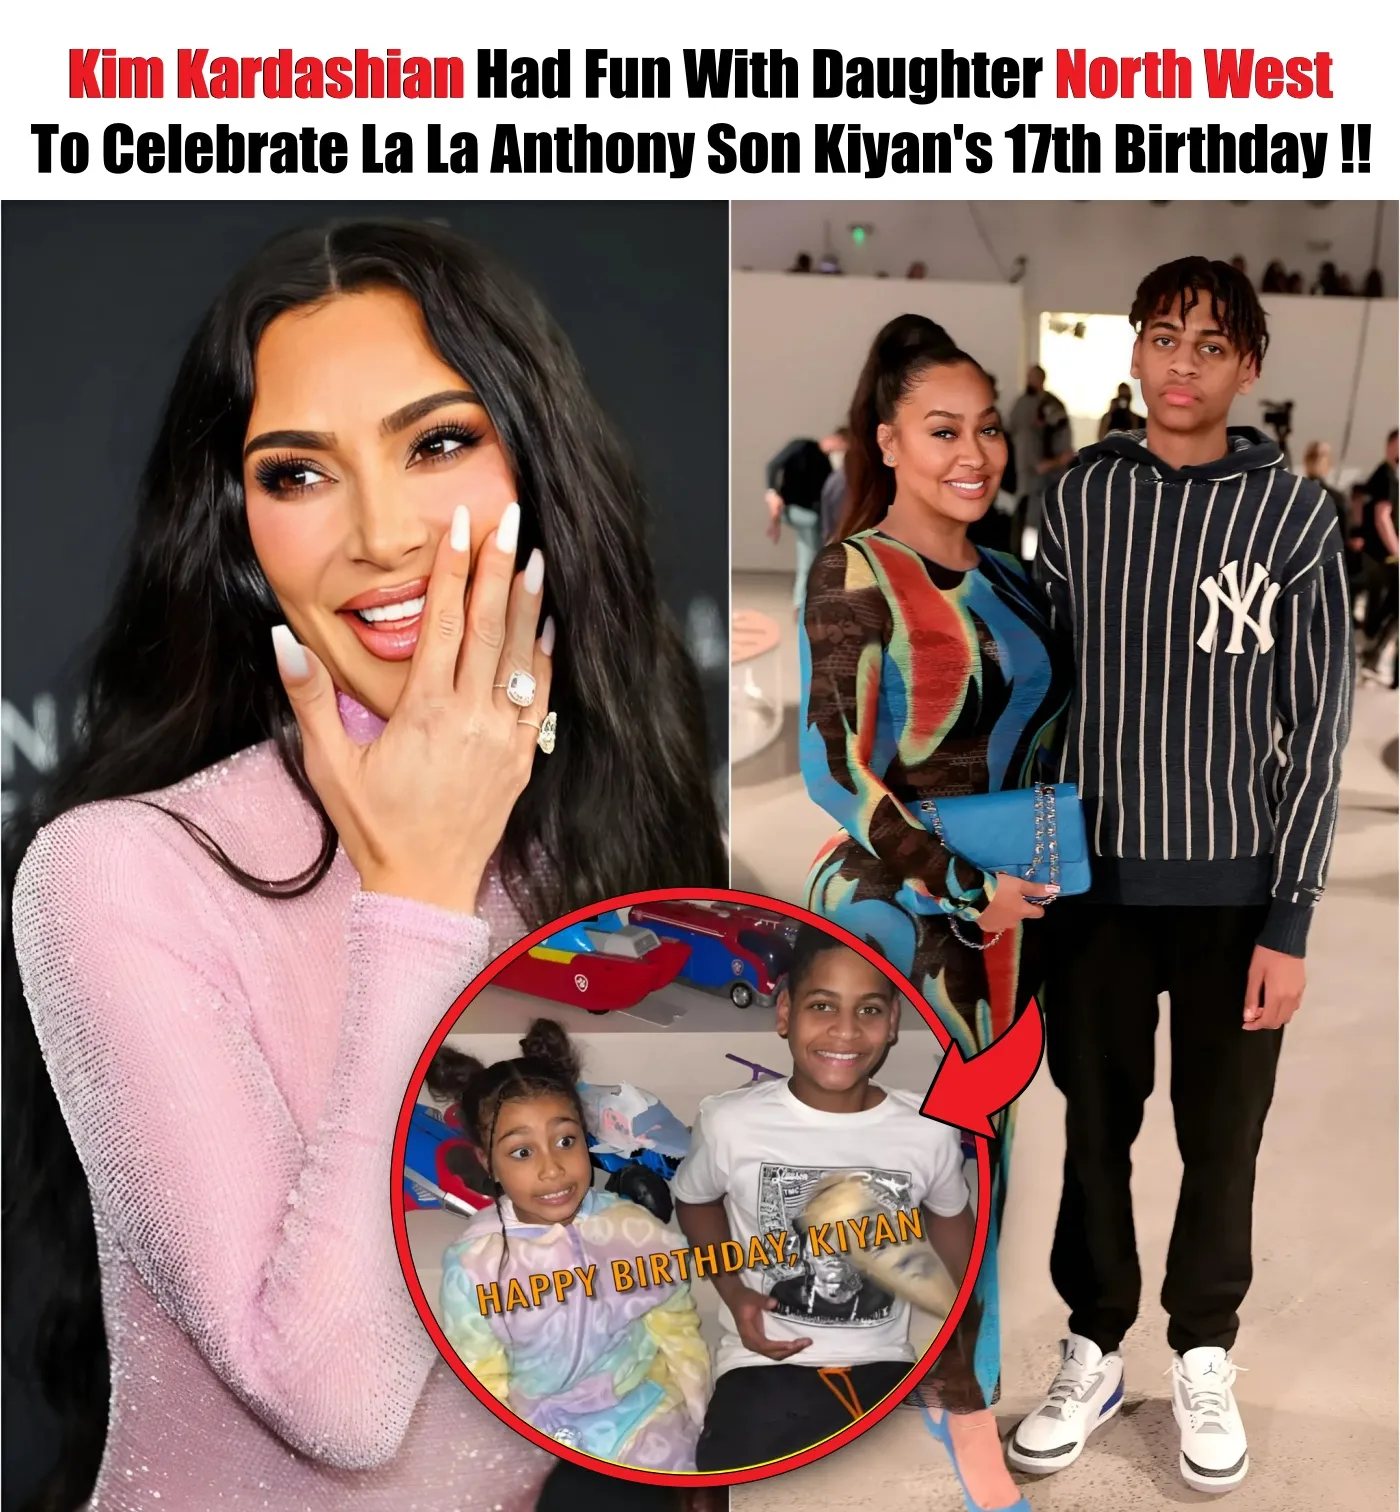 Cover Image for Kim Kardashian Had Fun With Daughter Northwest To Celebrate La La Anthony Son Kiyan’s 17th Birthday